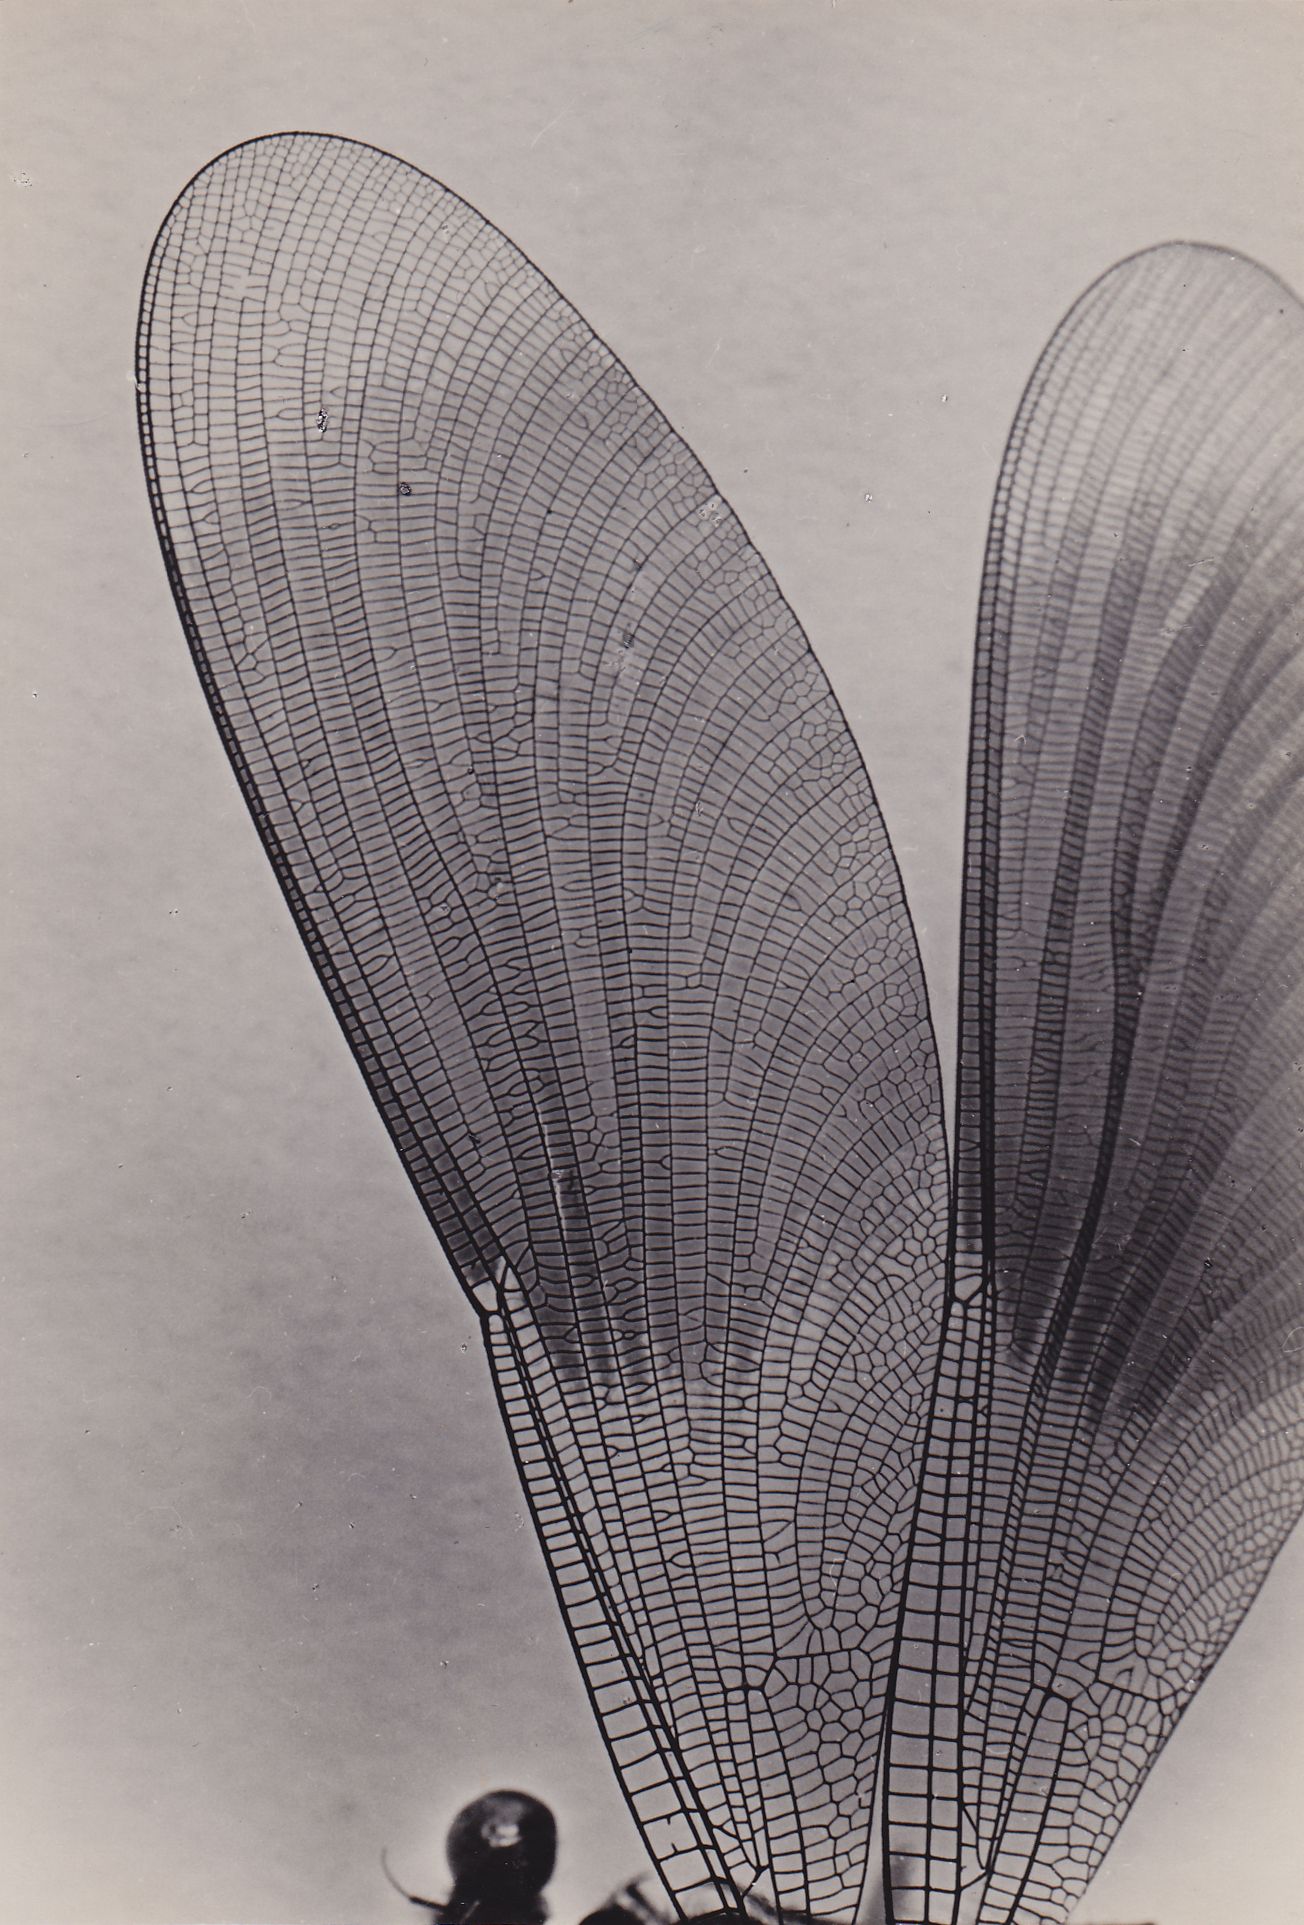 imre kinszki, untitled magnification, verőce, gelatin silver print, 1936; (15.4 cm x 17.6 cm) private collection